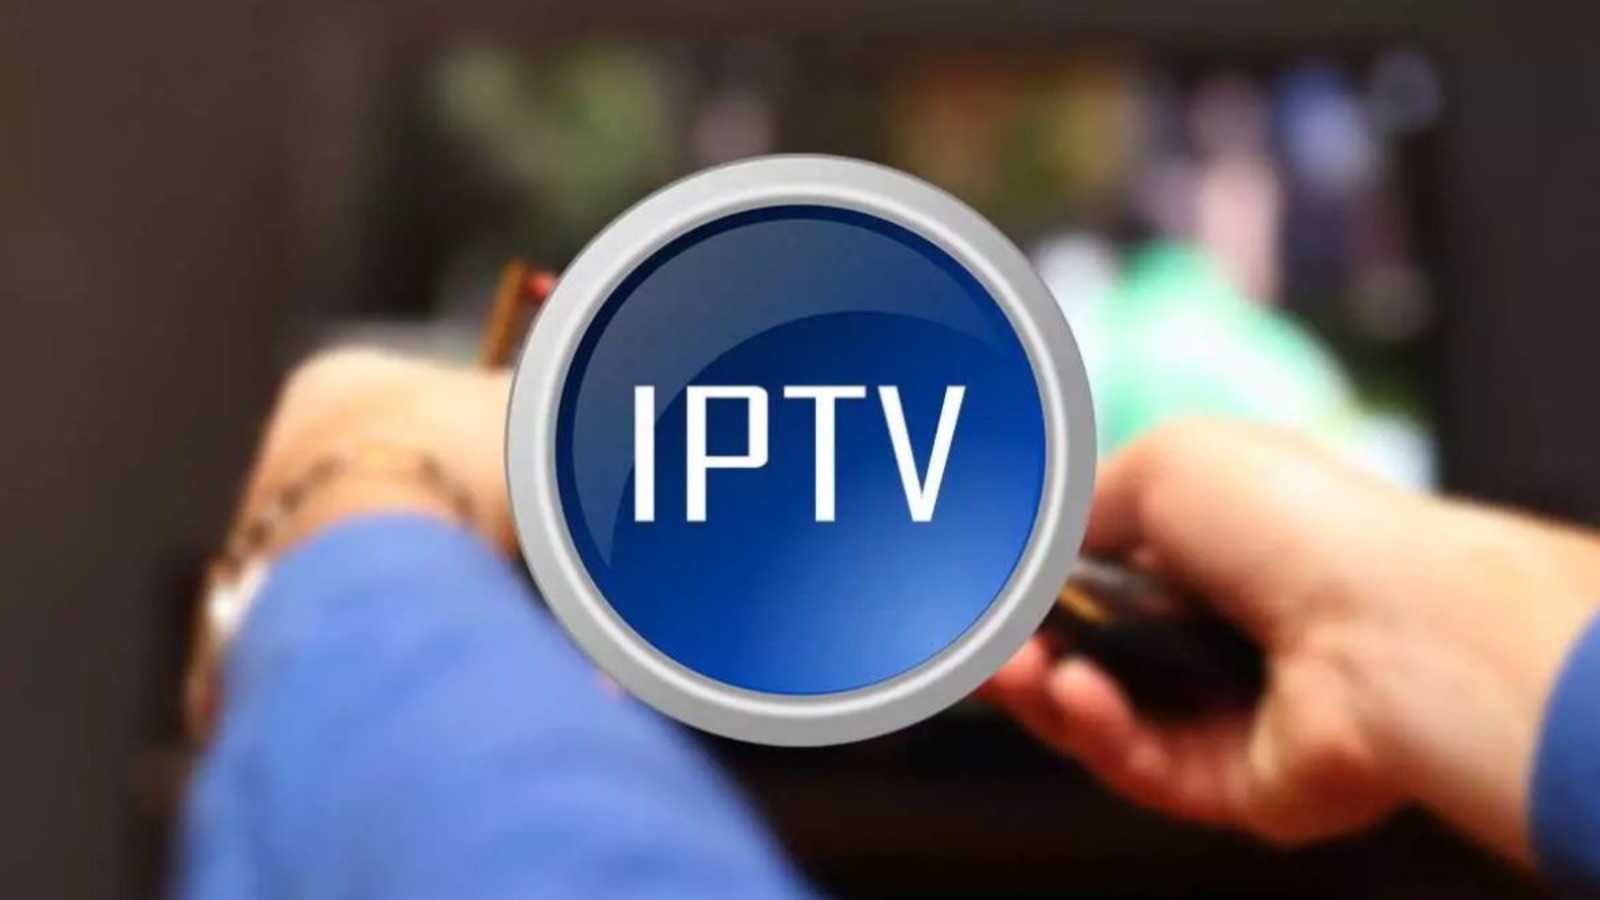 Pirateria ed IPTV, chiuse diverse piattaforme e indagate 21 PERSONE